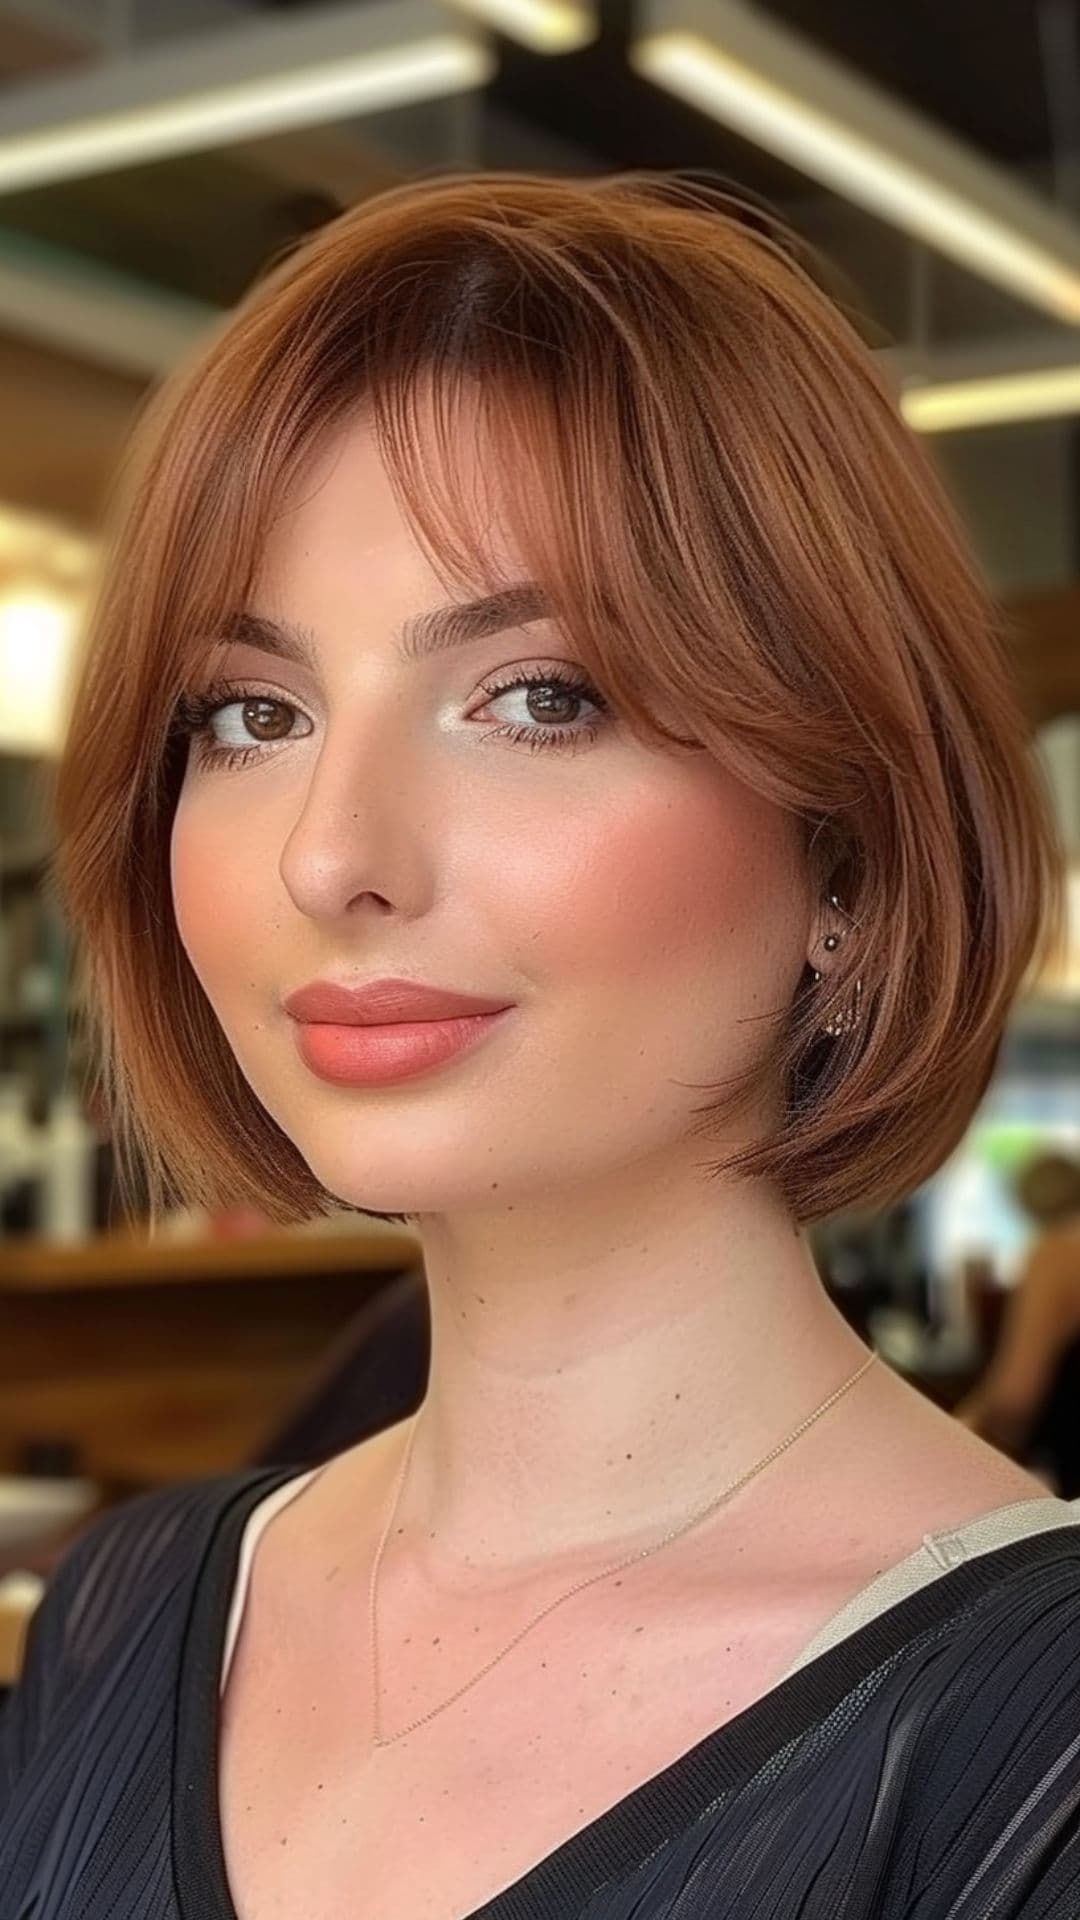 A woman modelling a classic chin-length bob haircut.